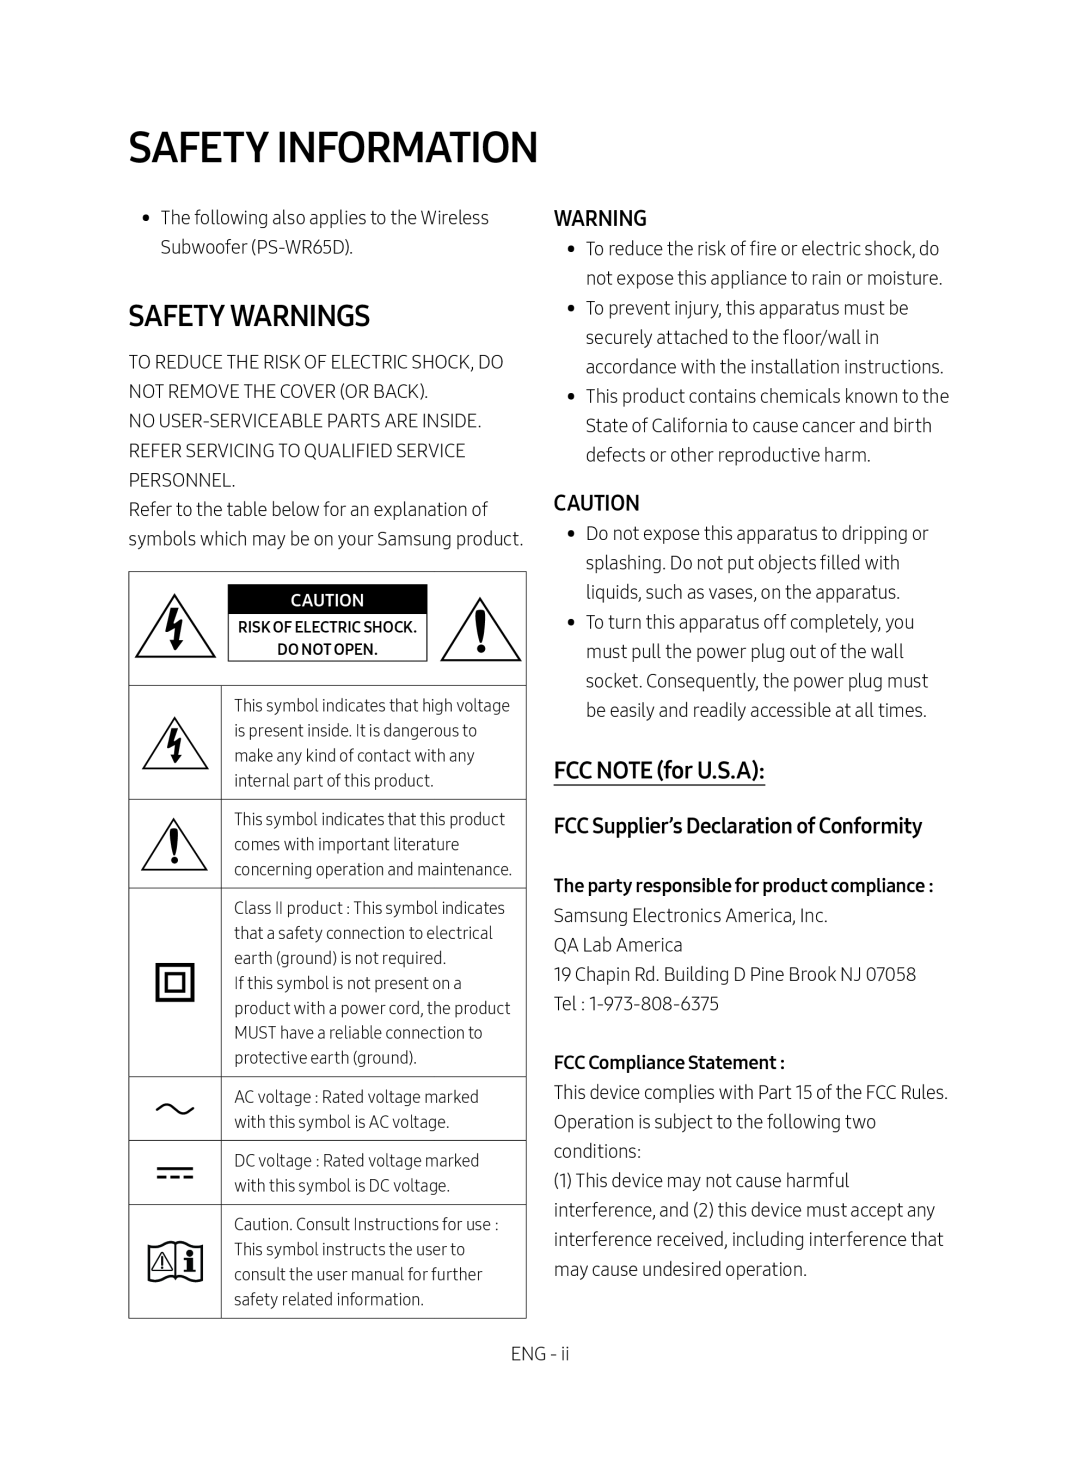 SAFETY WARNINGS Standard HW-R650